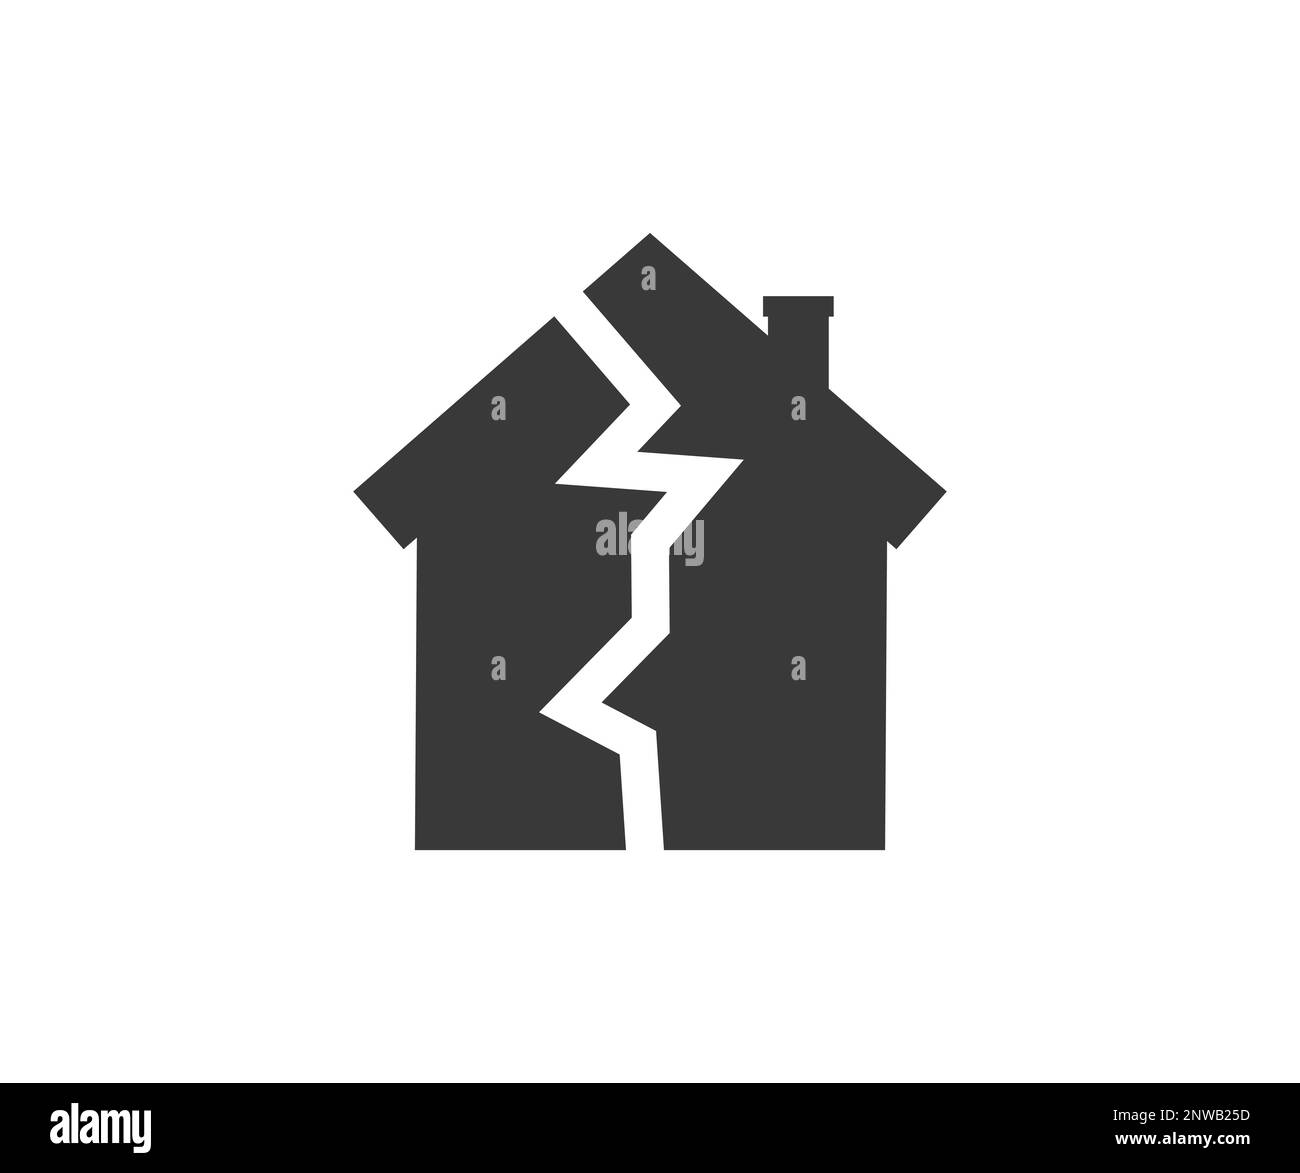 Earthquake damaged house logo design. Earthquake house. Damage house and debris during earthquake vector design and illustration. Stock Vector